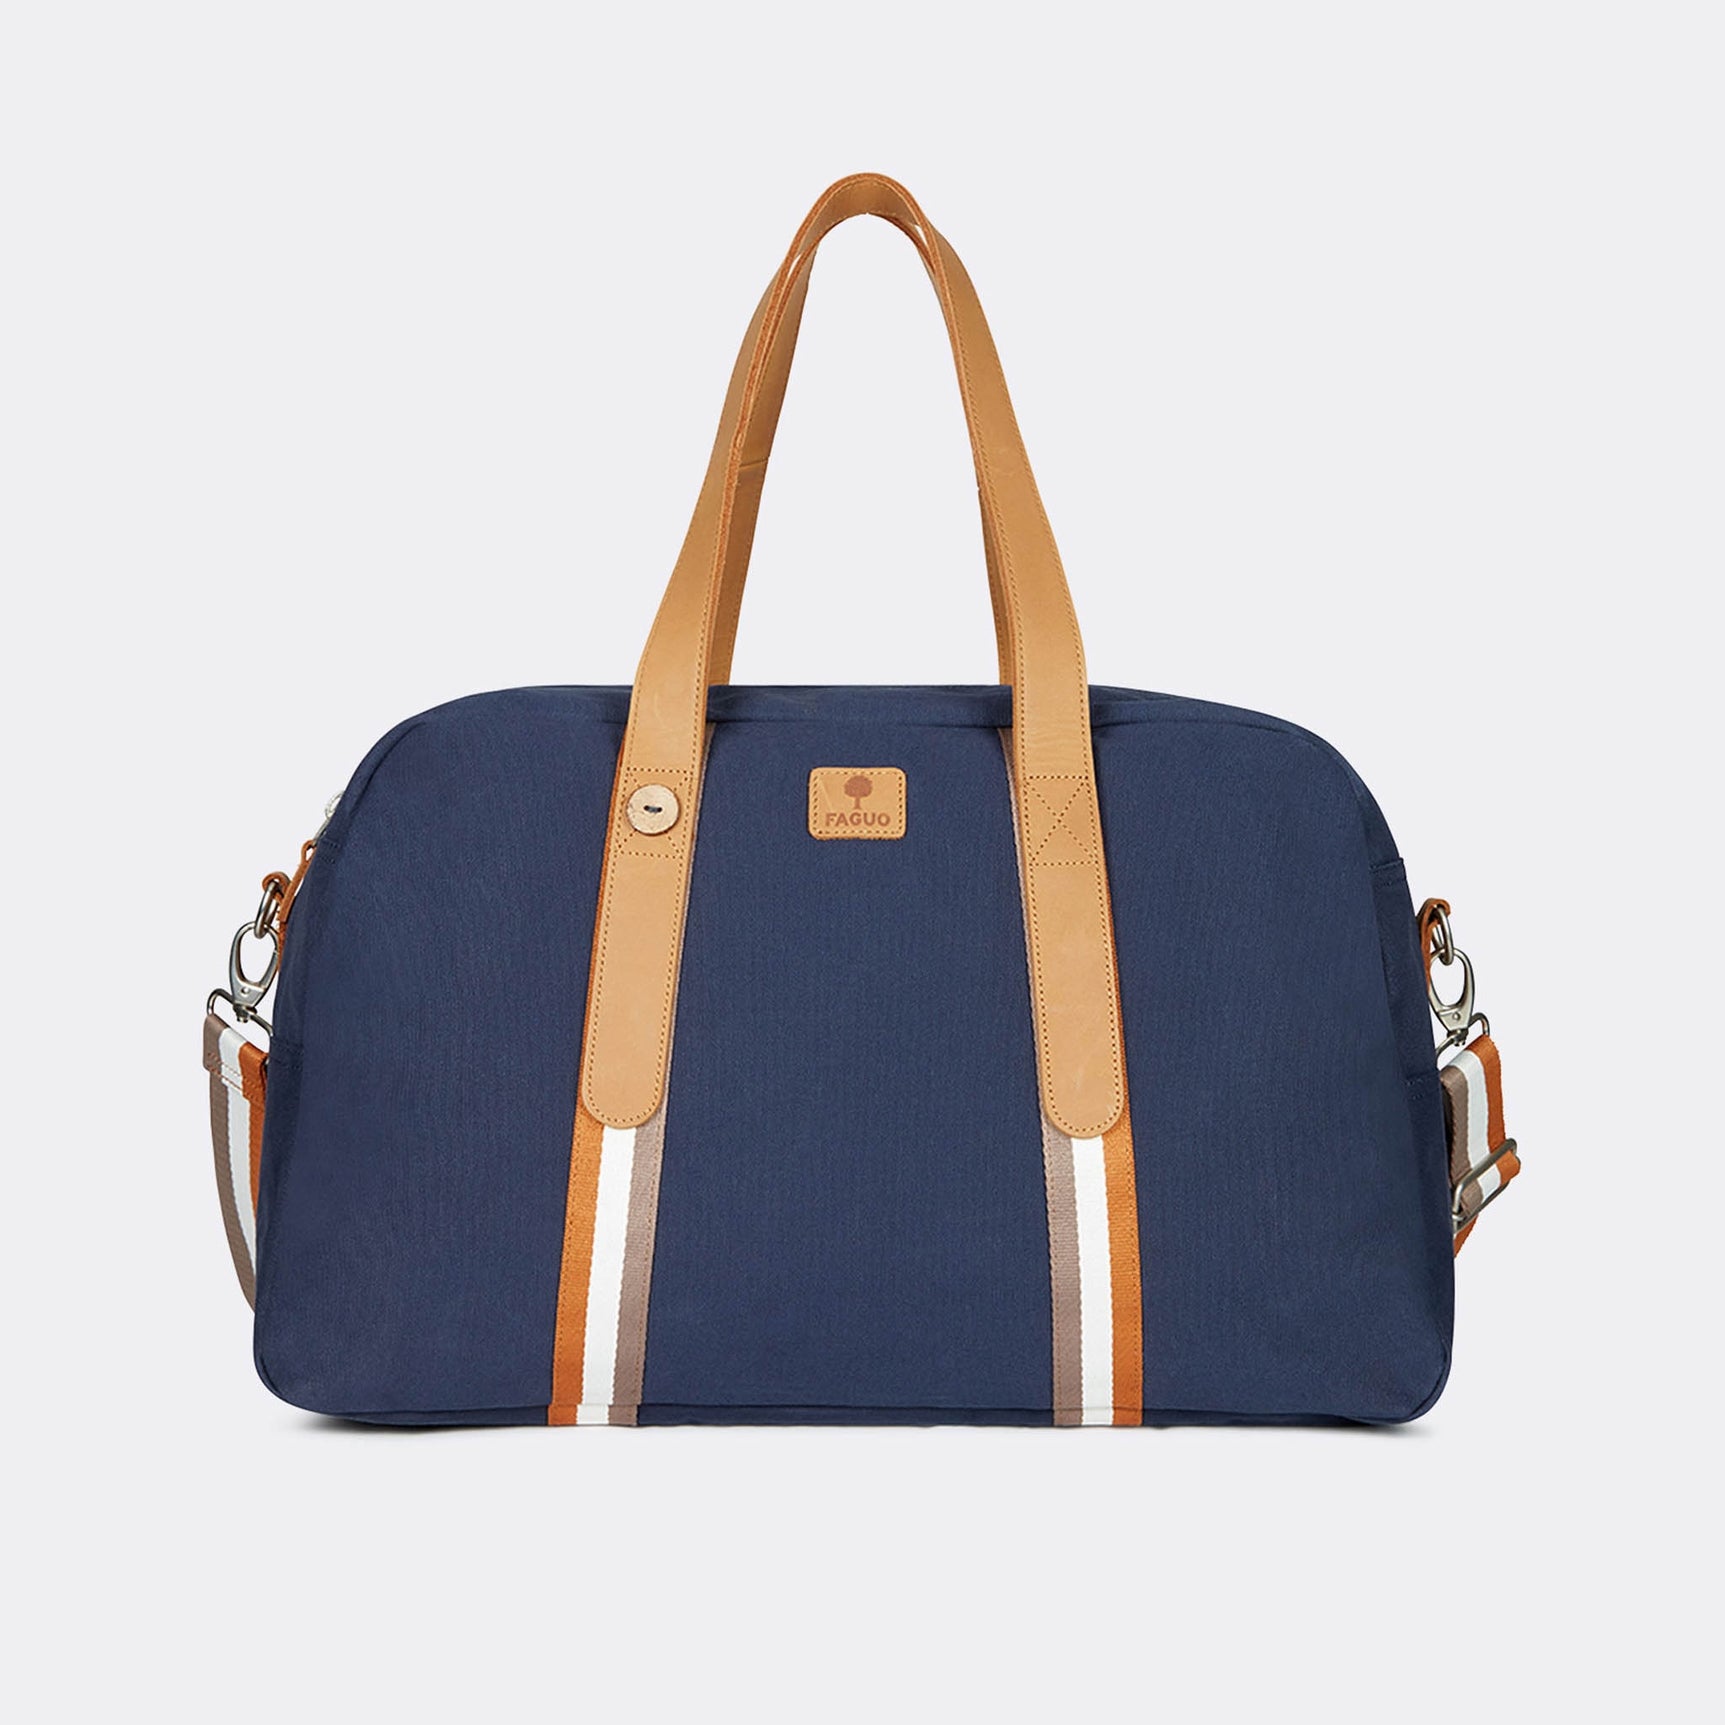 Faguo - Navy & tawny cotton travel bag - Bag48 - The Good Chic